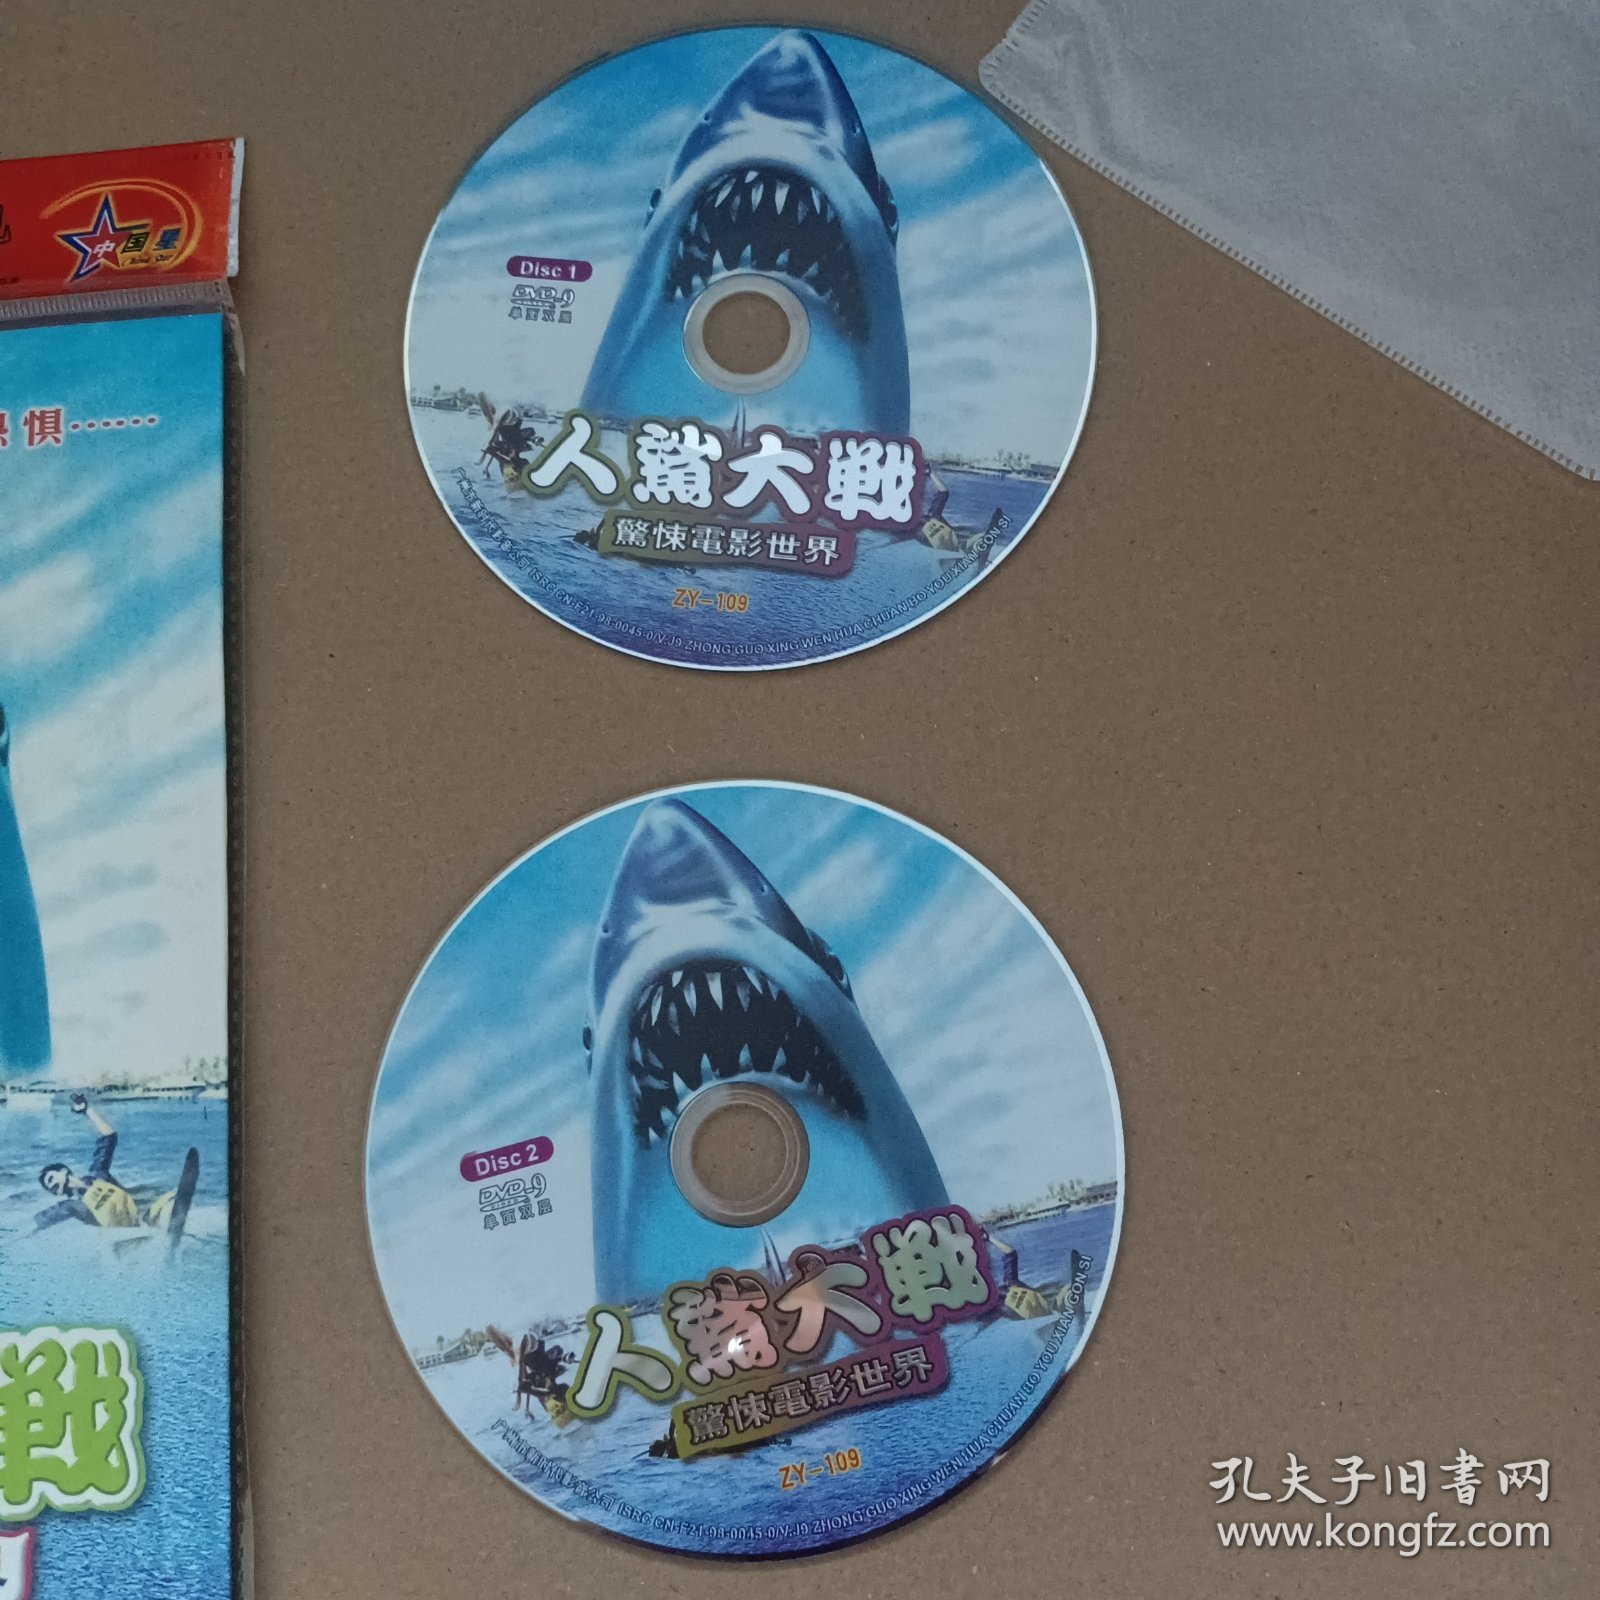 DVD－9 影碟 人鲨大战 惊悚电影世界（双碟 简装）dvd 光盘